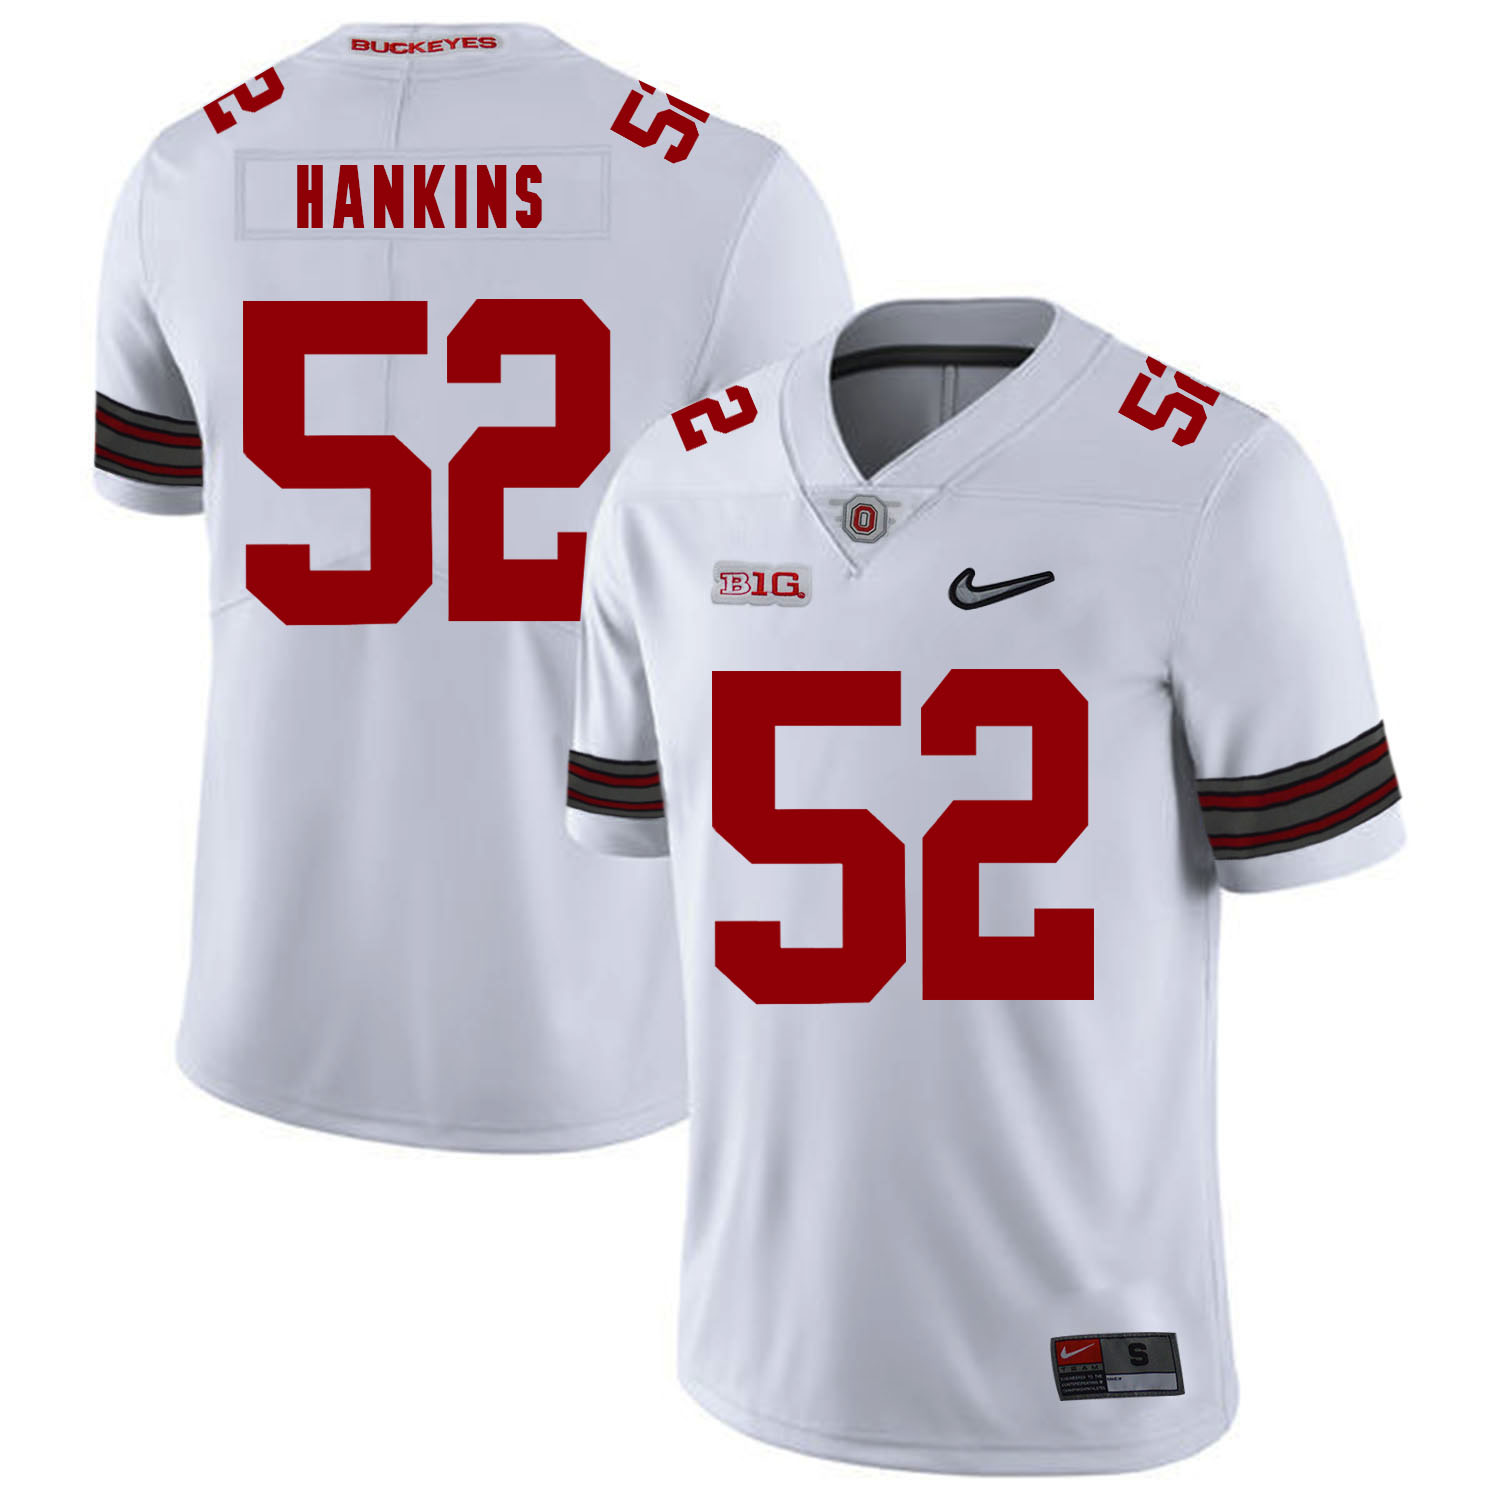 Ohio State Buckeyes 52 Johnathan Hankins White Diamond Nike Logo College Football Jersey